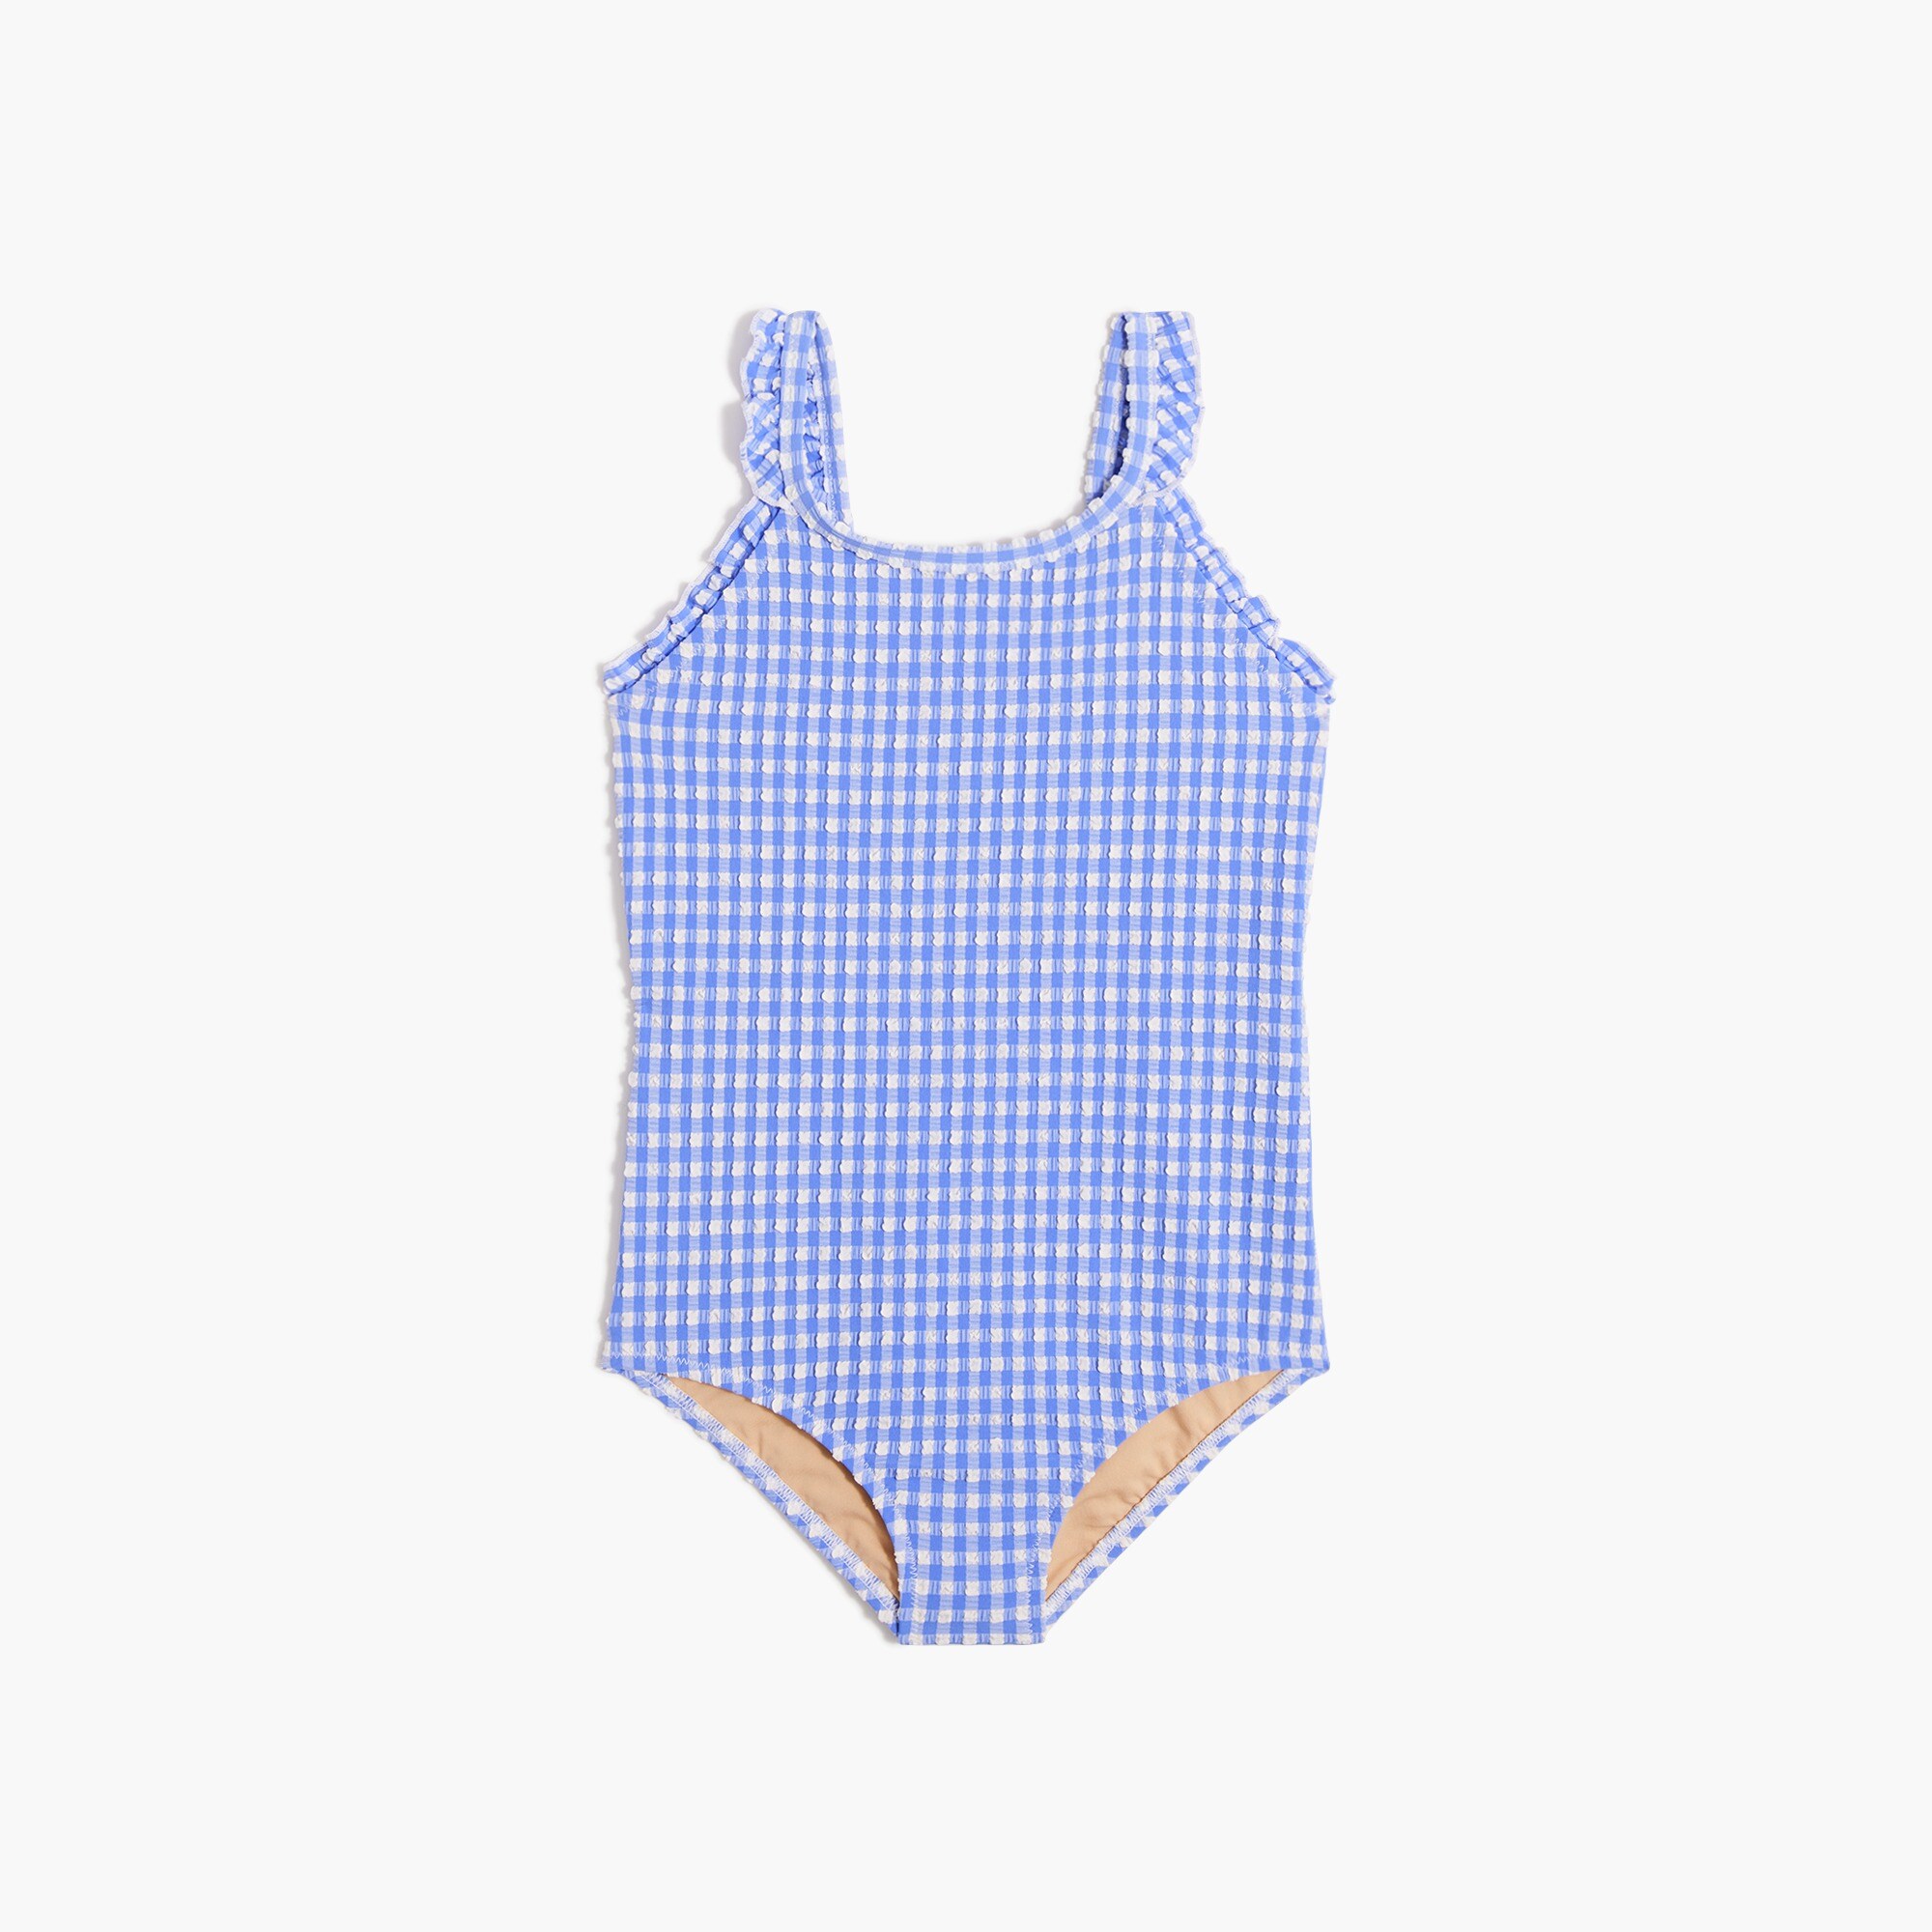  Girls' seersucker ruffle one-piece swimsuit